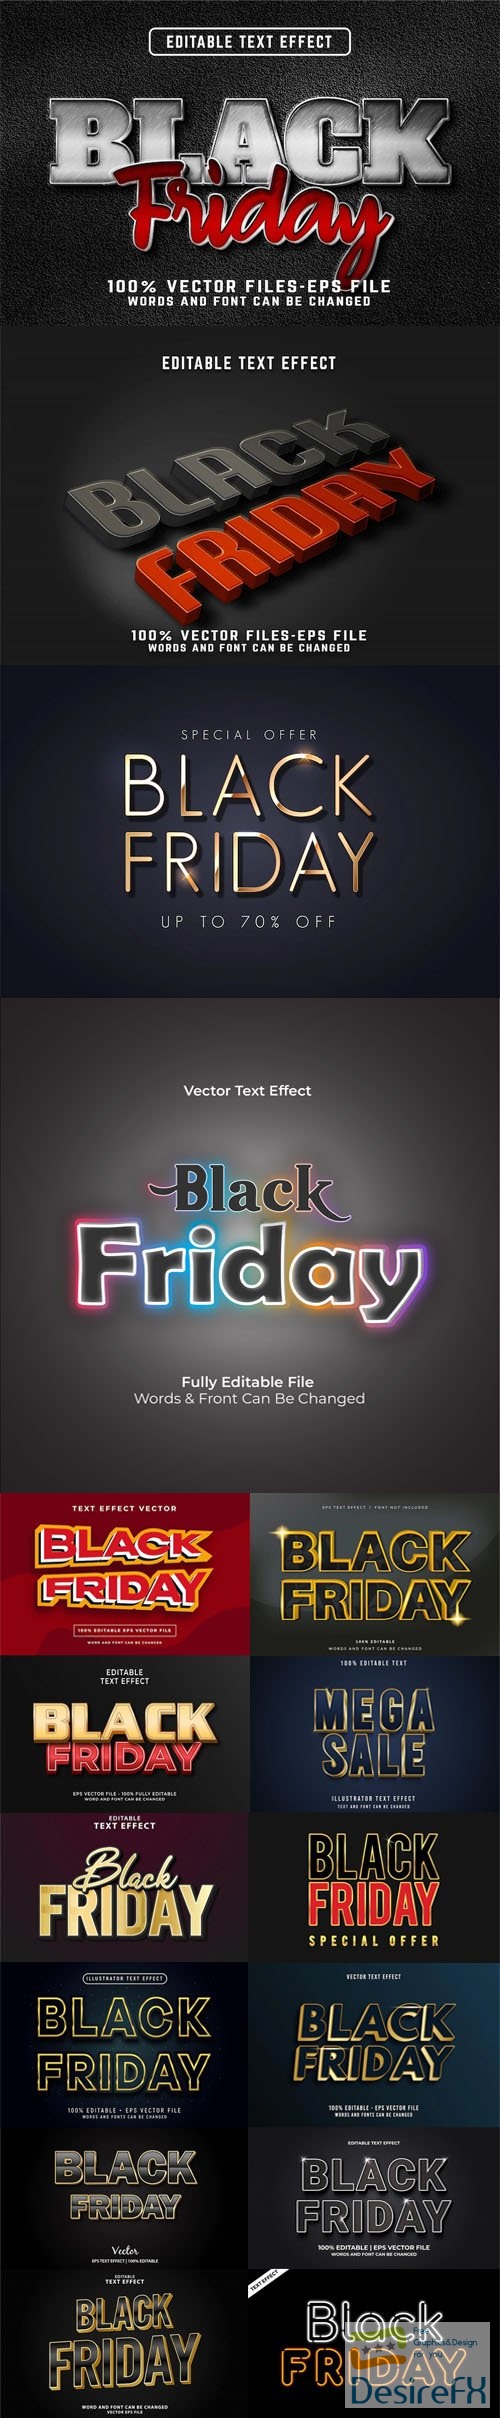 Modern Black Friday 3D Text Effects Vector Templates Vol.5